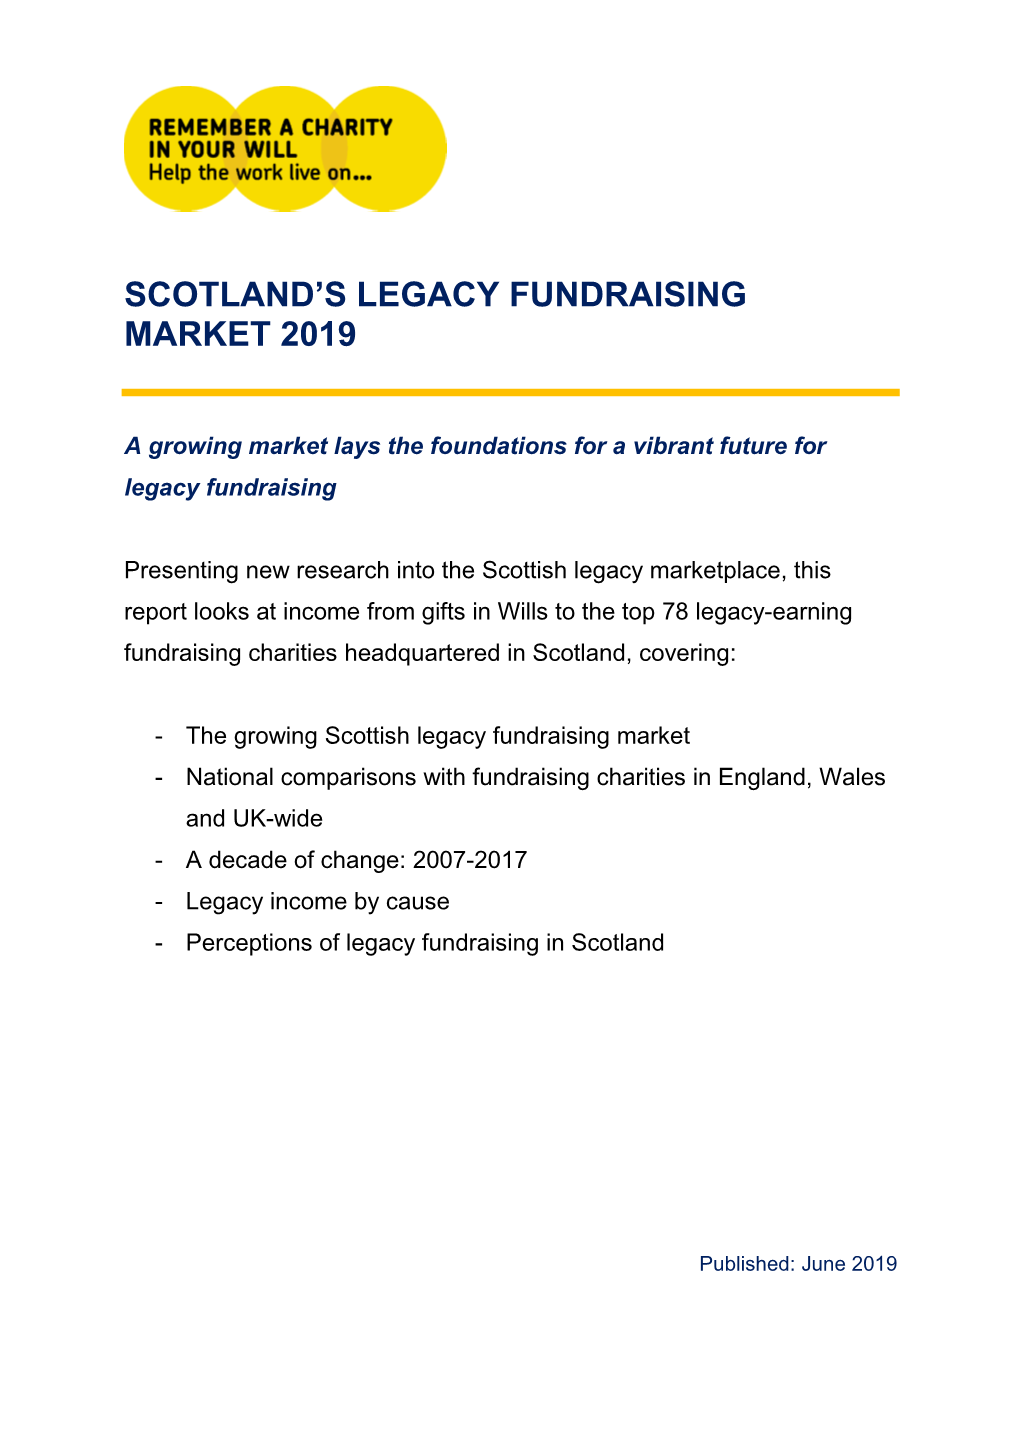 Scotland's Legacy Fundraising Market 2019